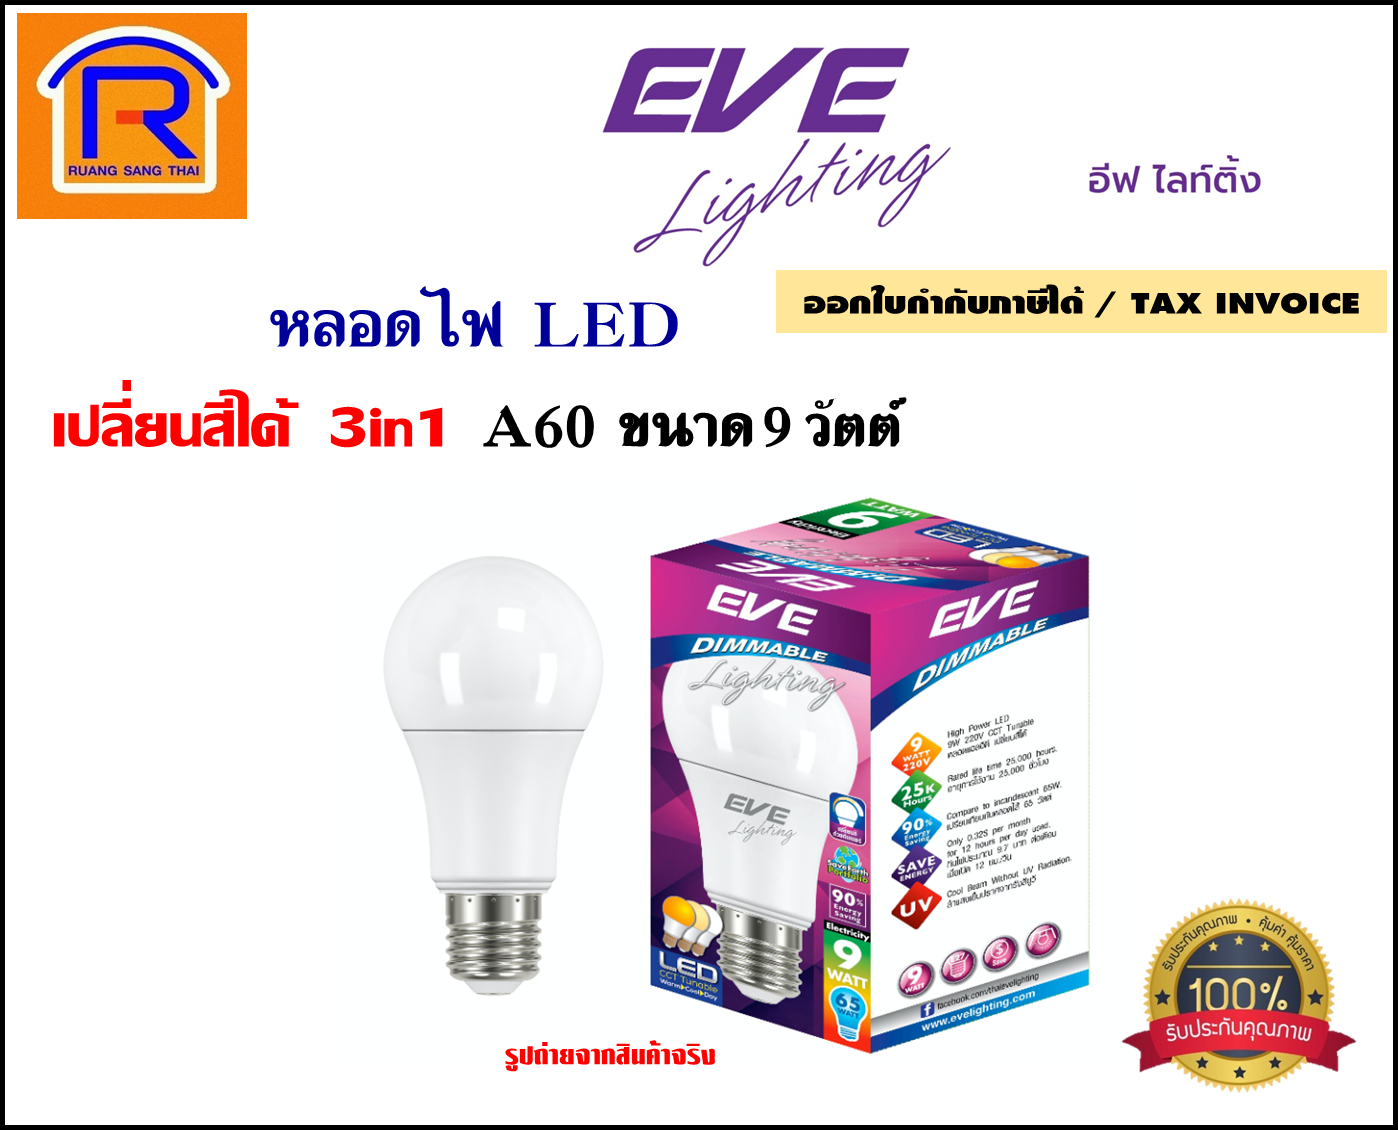 EVE lighting หลอดไฟ LED 3in1 ขนาด 9 วัตต์ (เปลี่ยนสีได้)